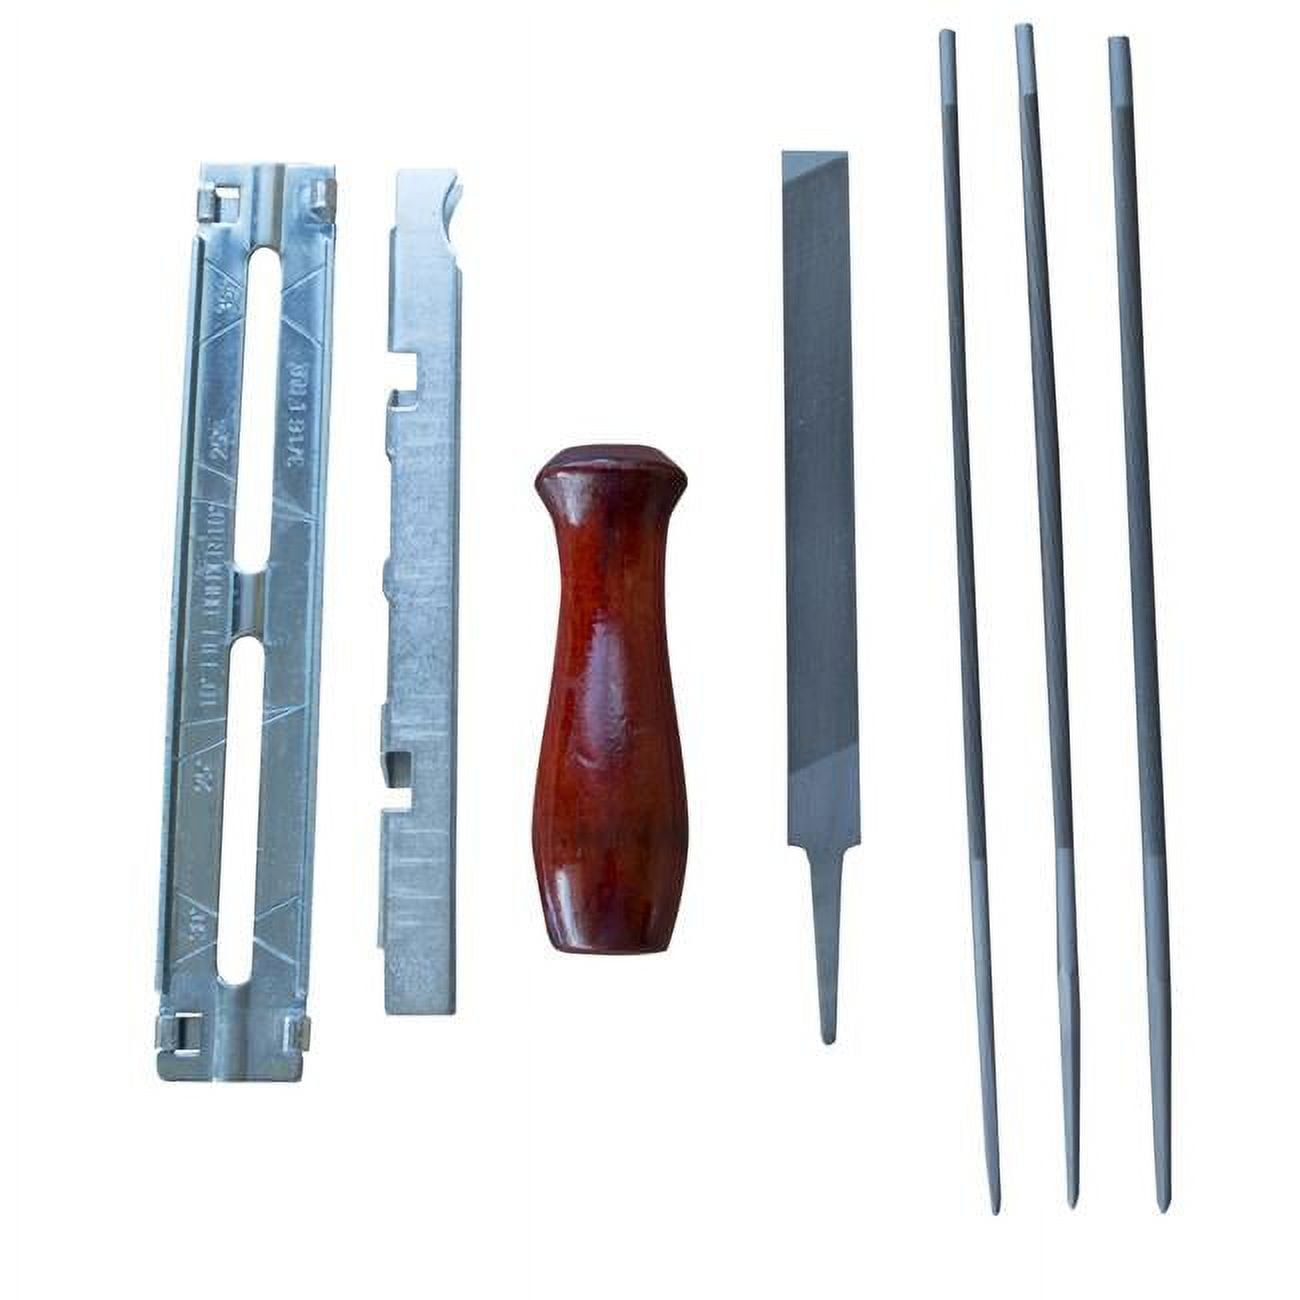 Csskit8 Multi-size Manual Chain Saw Sharpening Kit